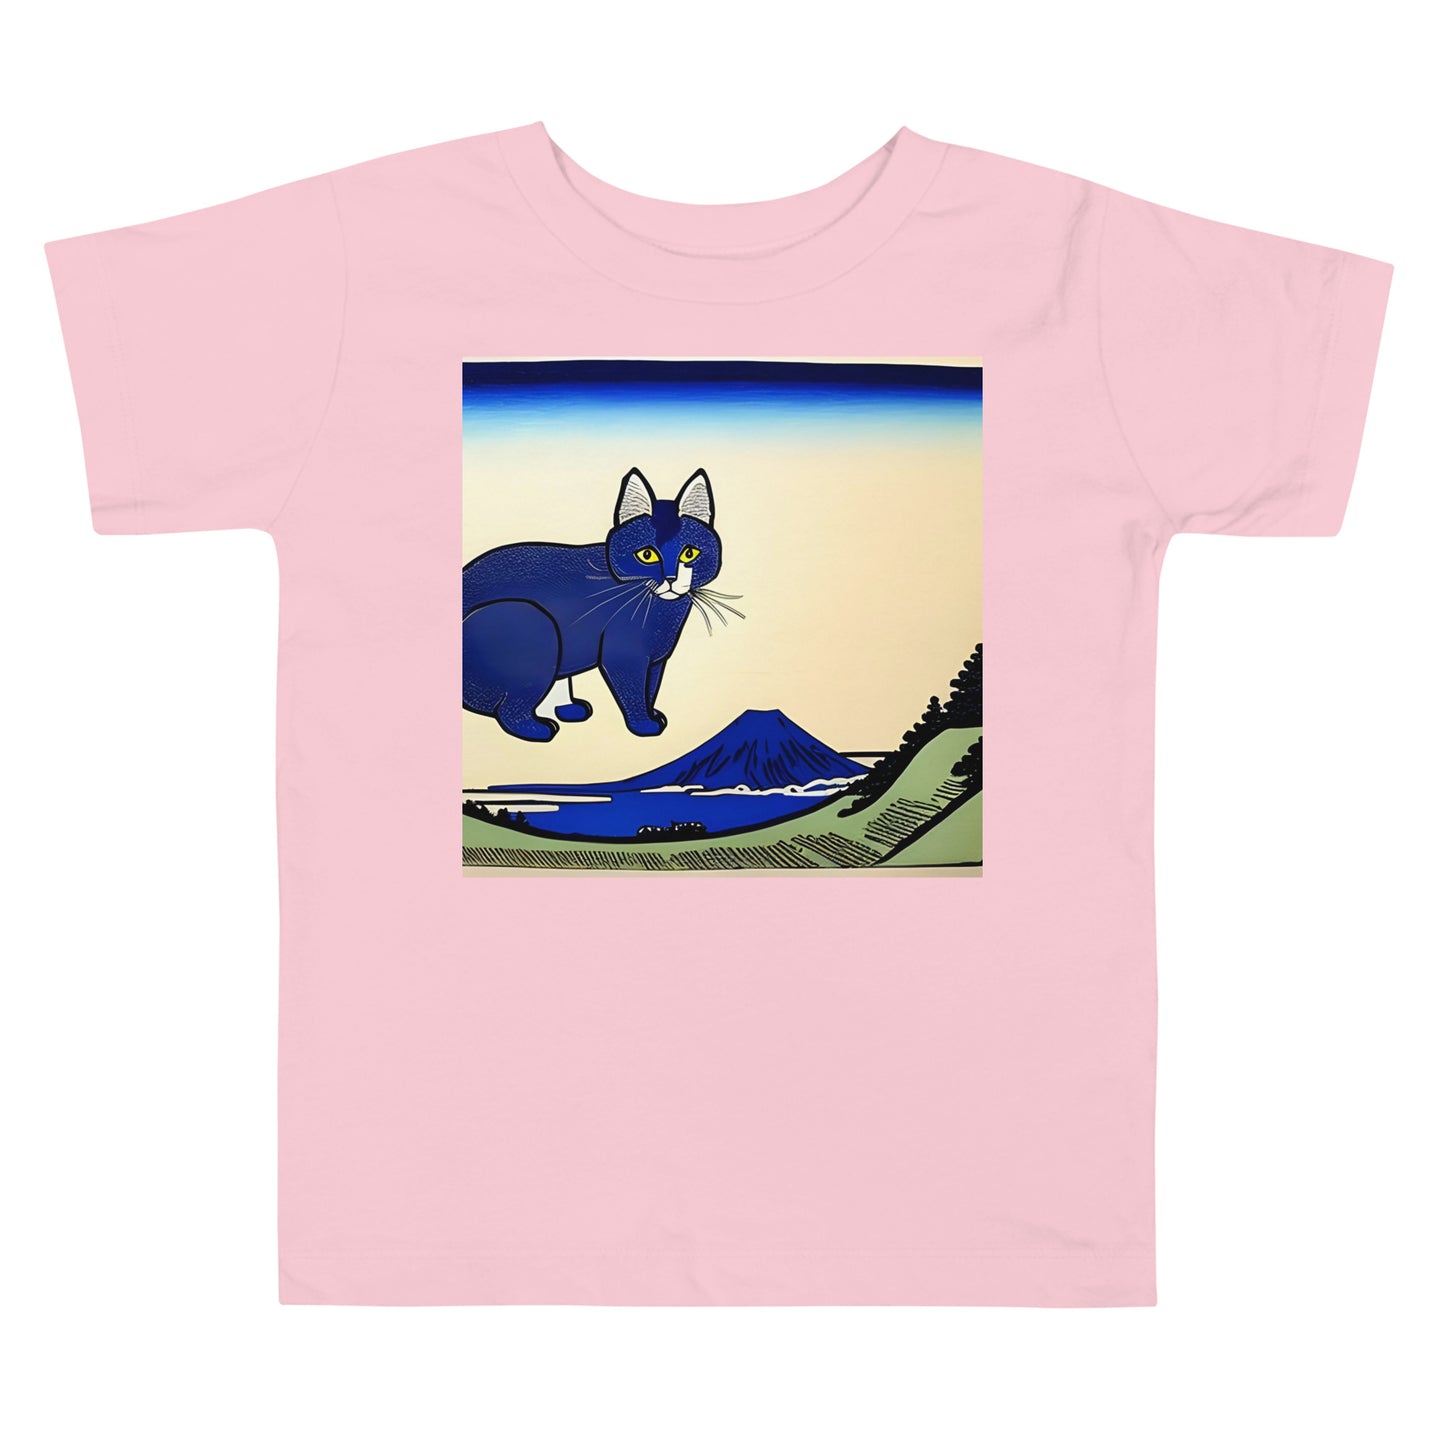 Meowsome Toddler's T-Shirt - 022